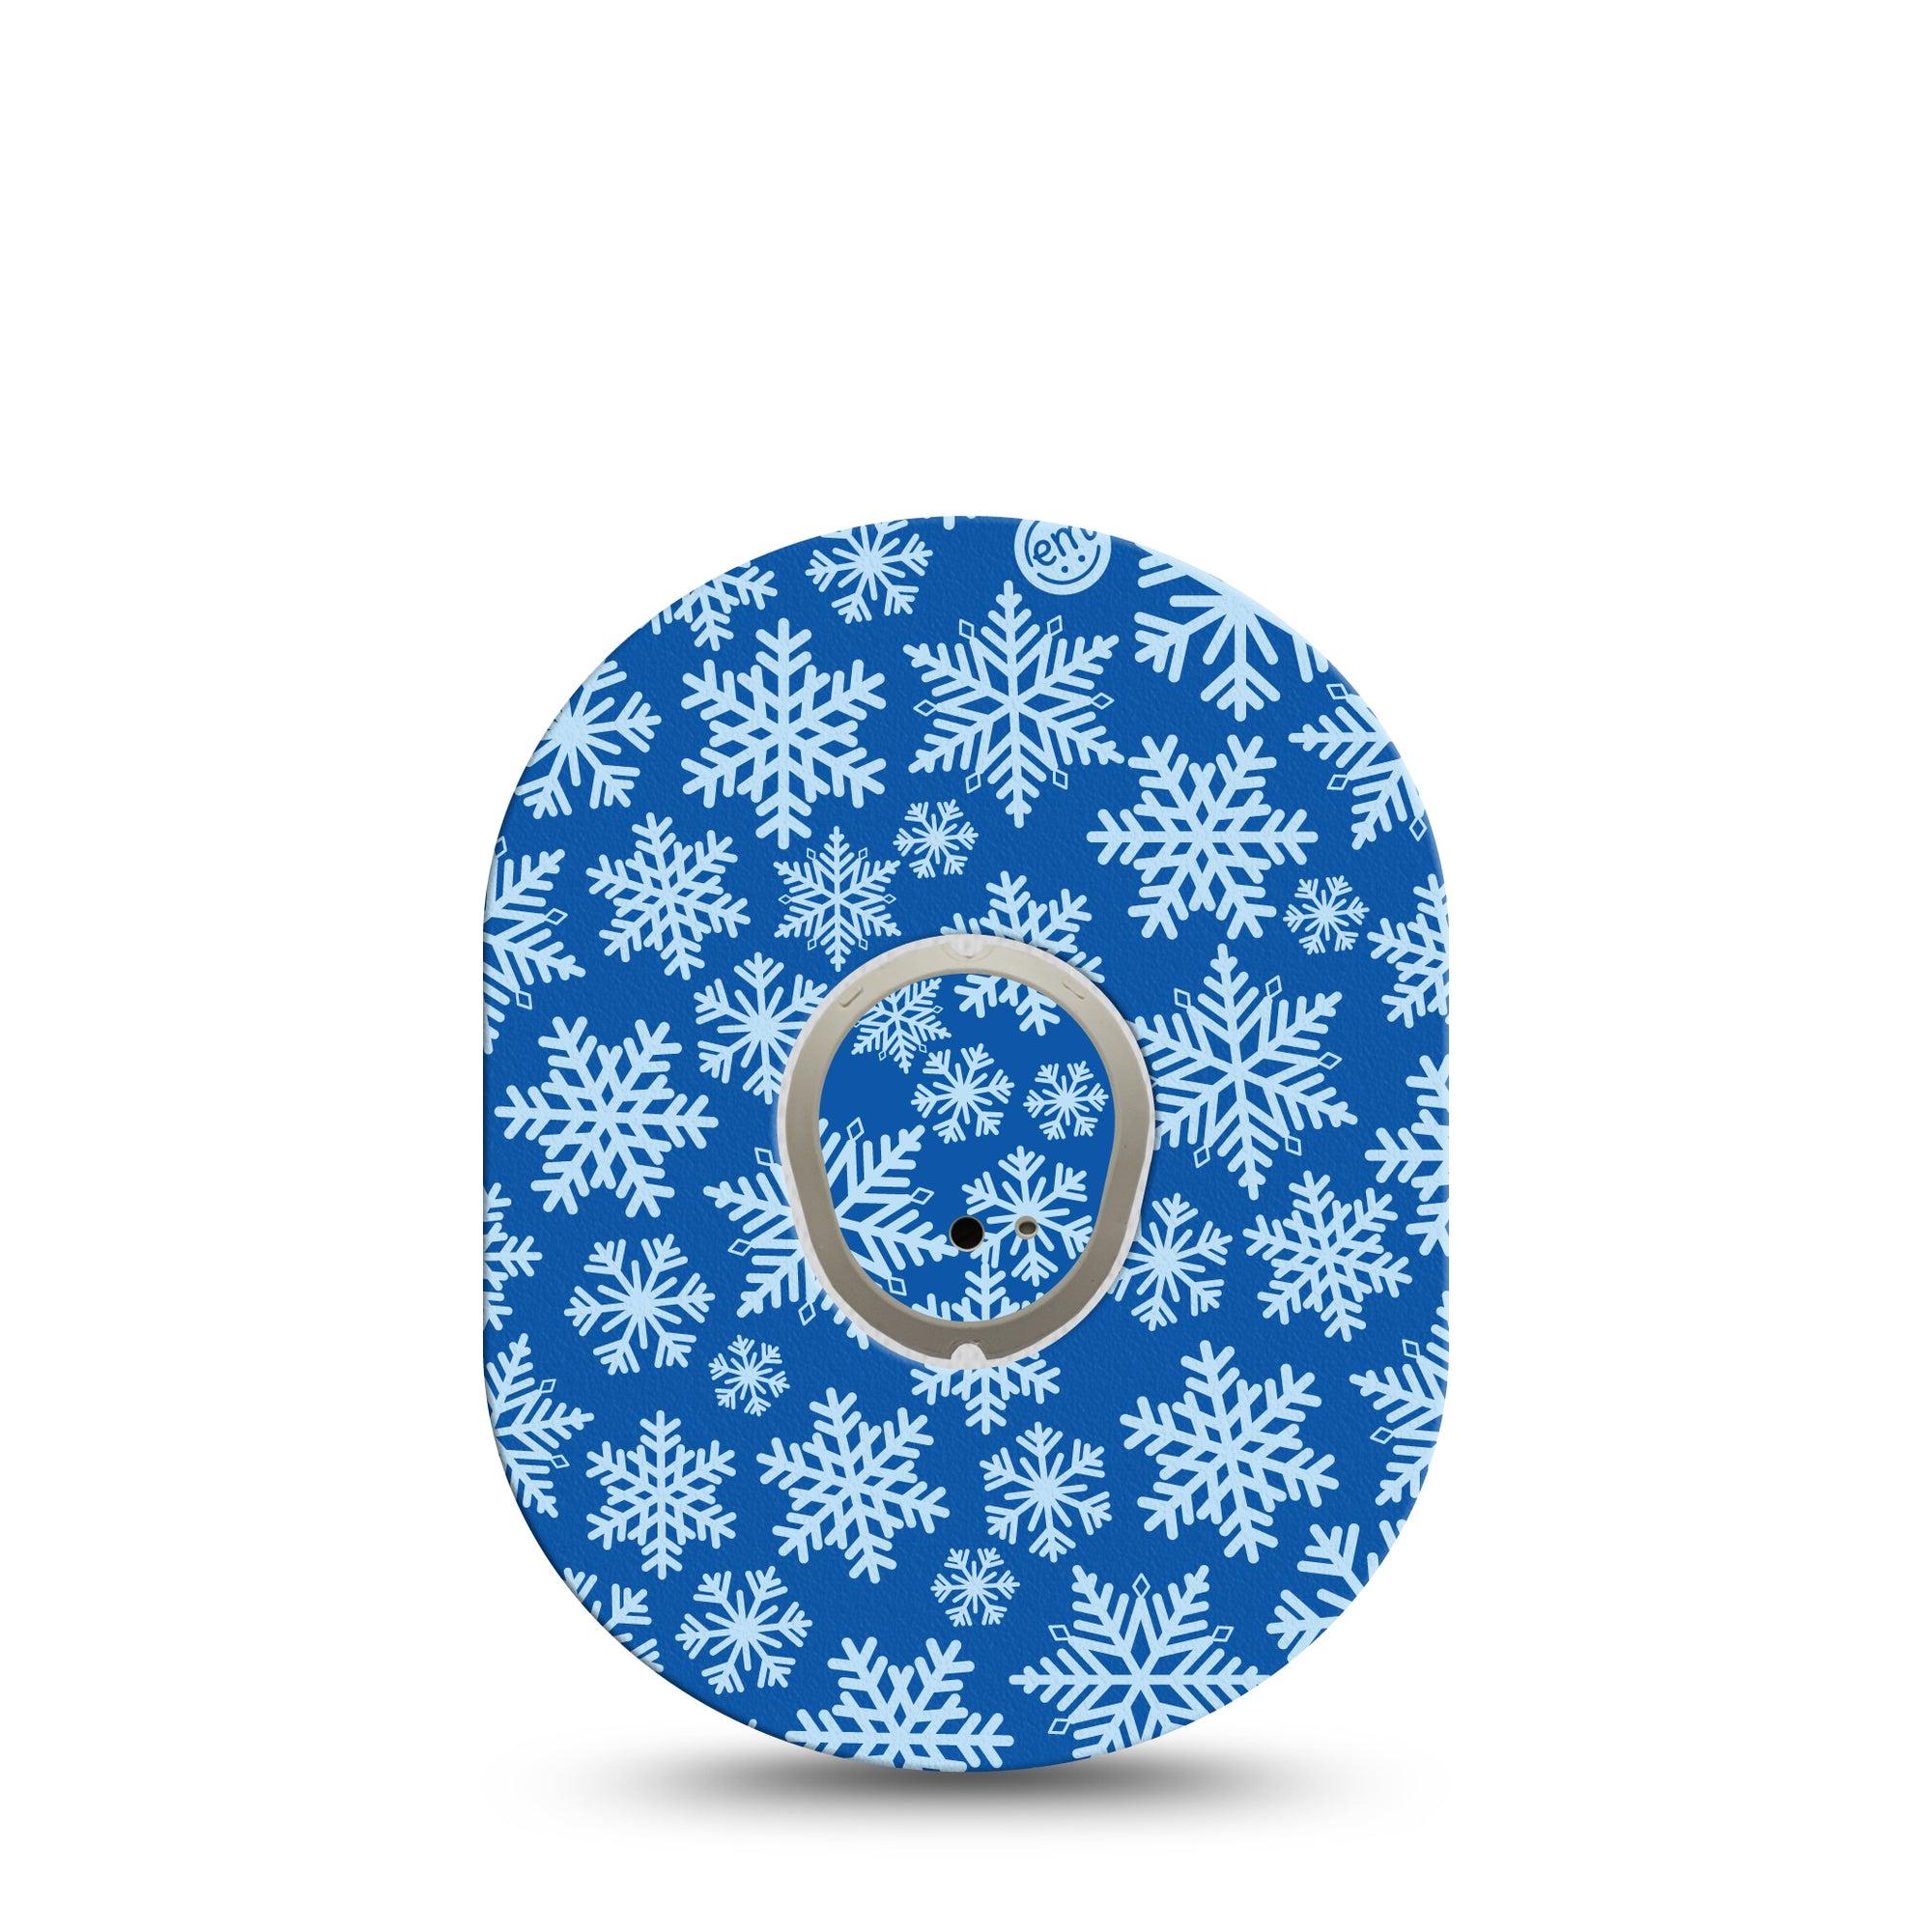 Snowflake Dexcom G7 Transmitter Sticker, Single, Kinds Of Snowflakes Inspired, Dexcom G7 Vinyl Center Sticker, With Matching Dexcom G7 Tape, CGM Plaster Patch Design, Dexcom Stelo Glucose Biosensor System